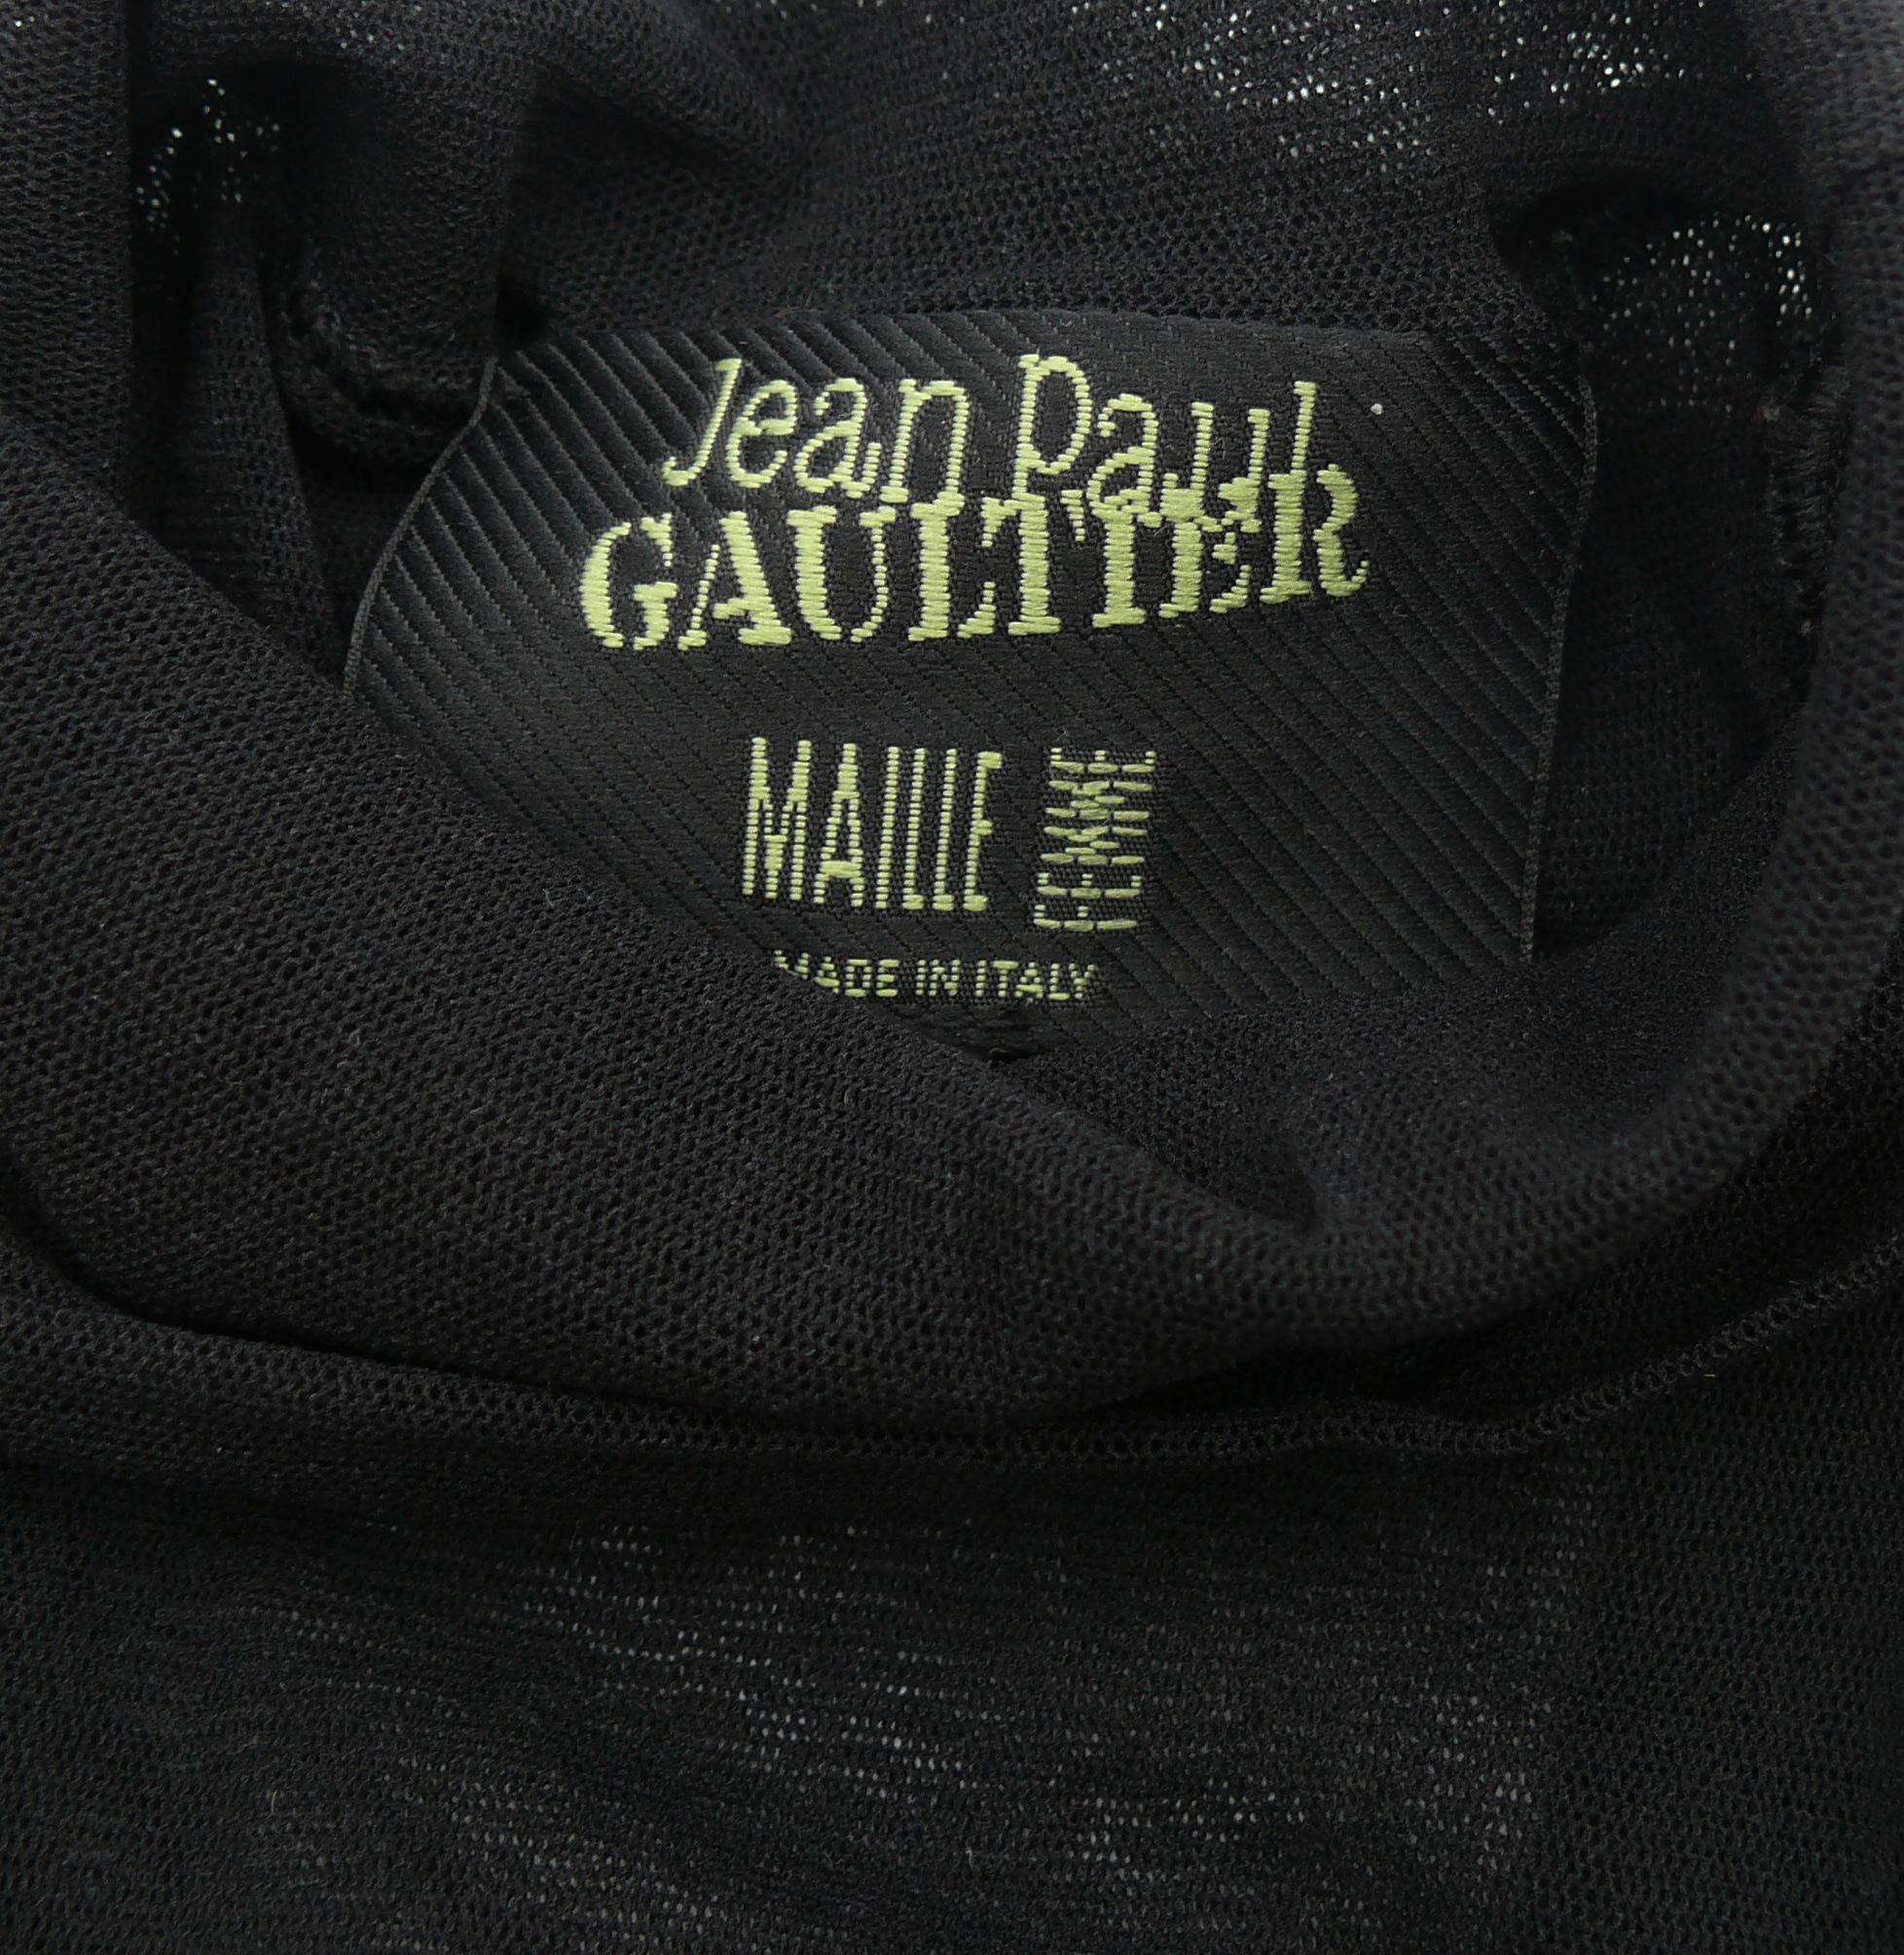 Jean Paul Gaultier Vintage Matelot Sheer Mesh Top In Good Condition For Sale In Nice, FR